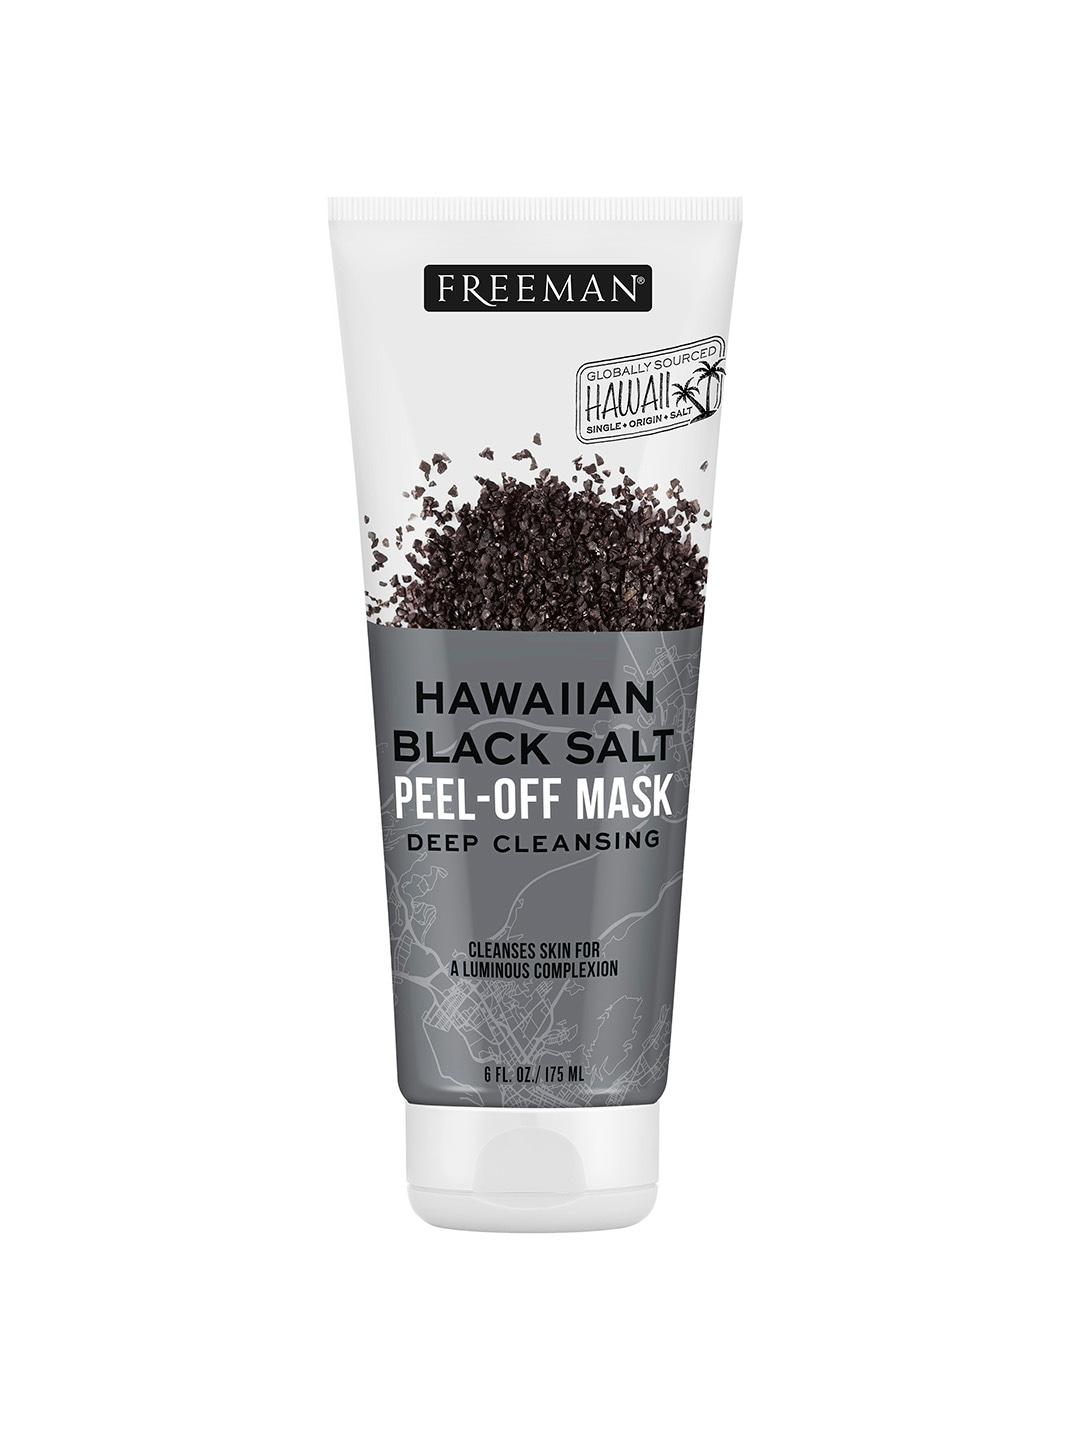 FREEMAN Hawaiian Black Salt Peel-off Mask for Deep Cleansing - 175 ml